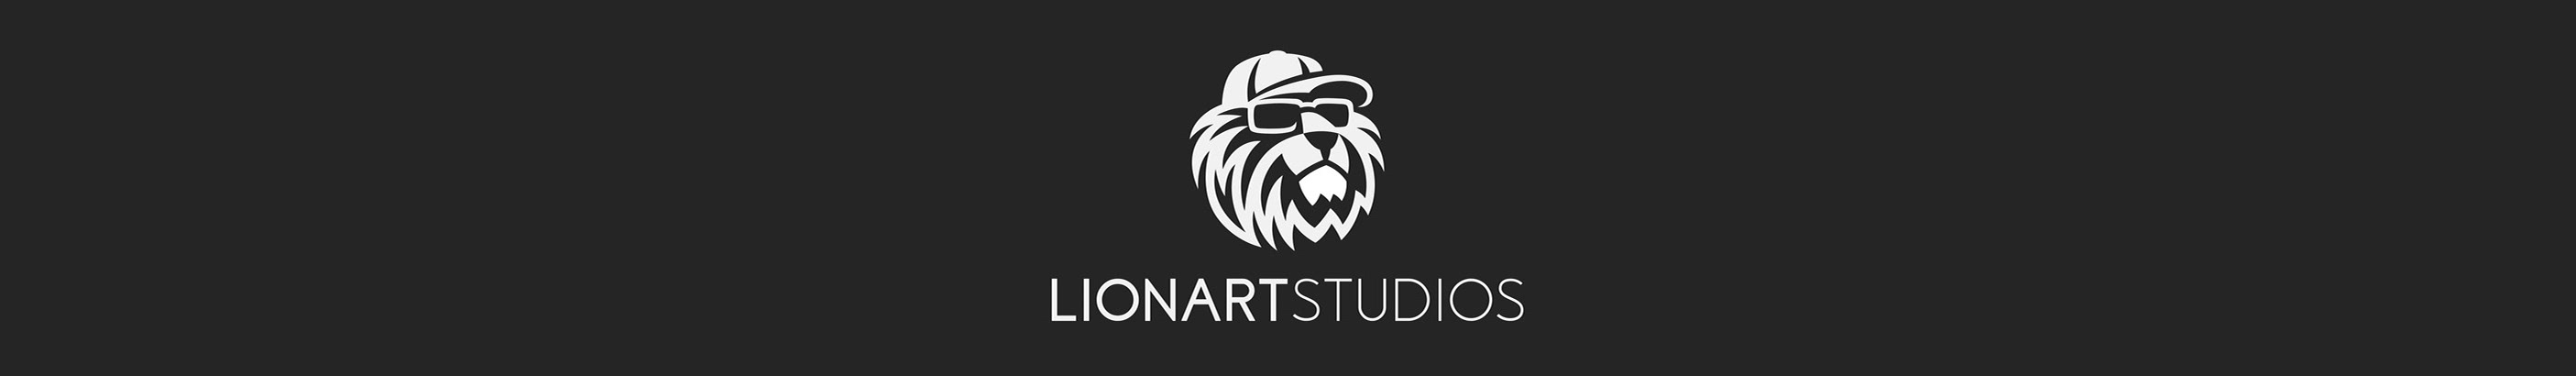 LionArt Studios's profile banner